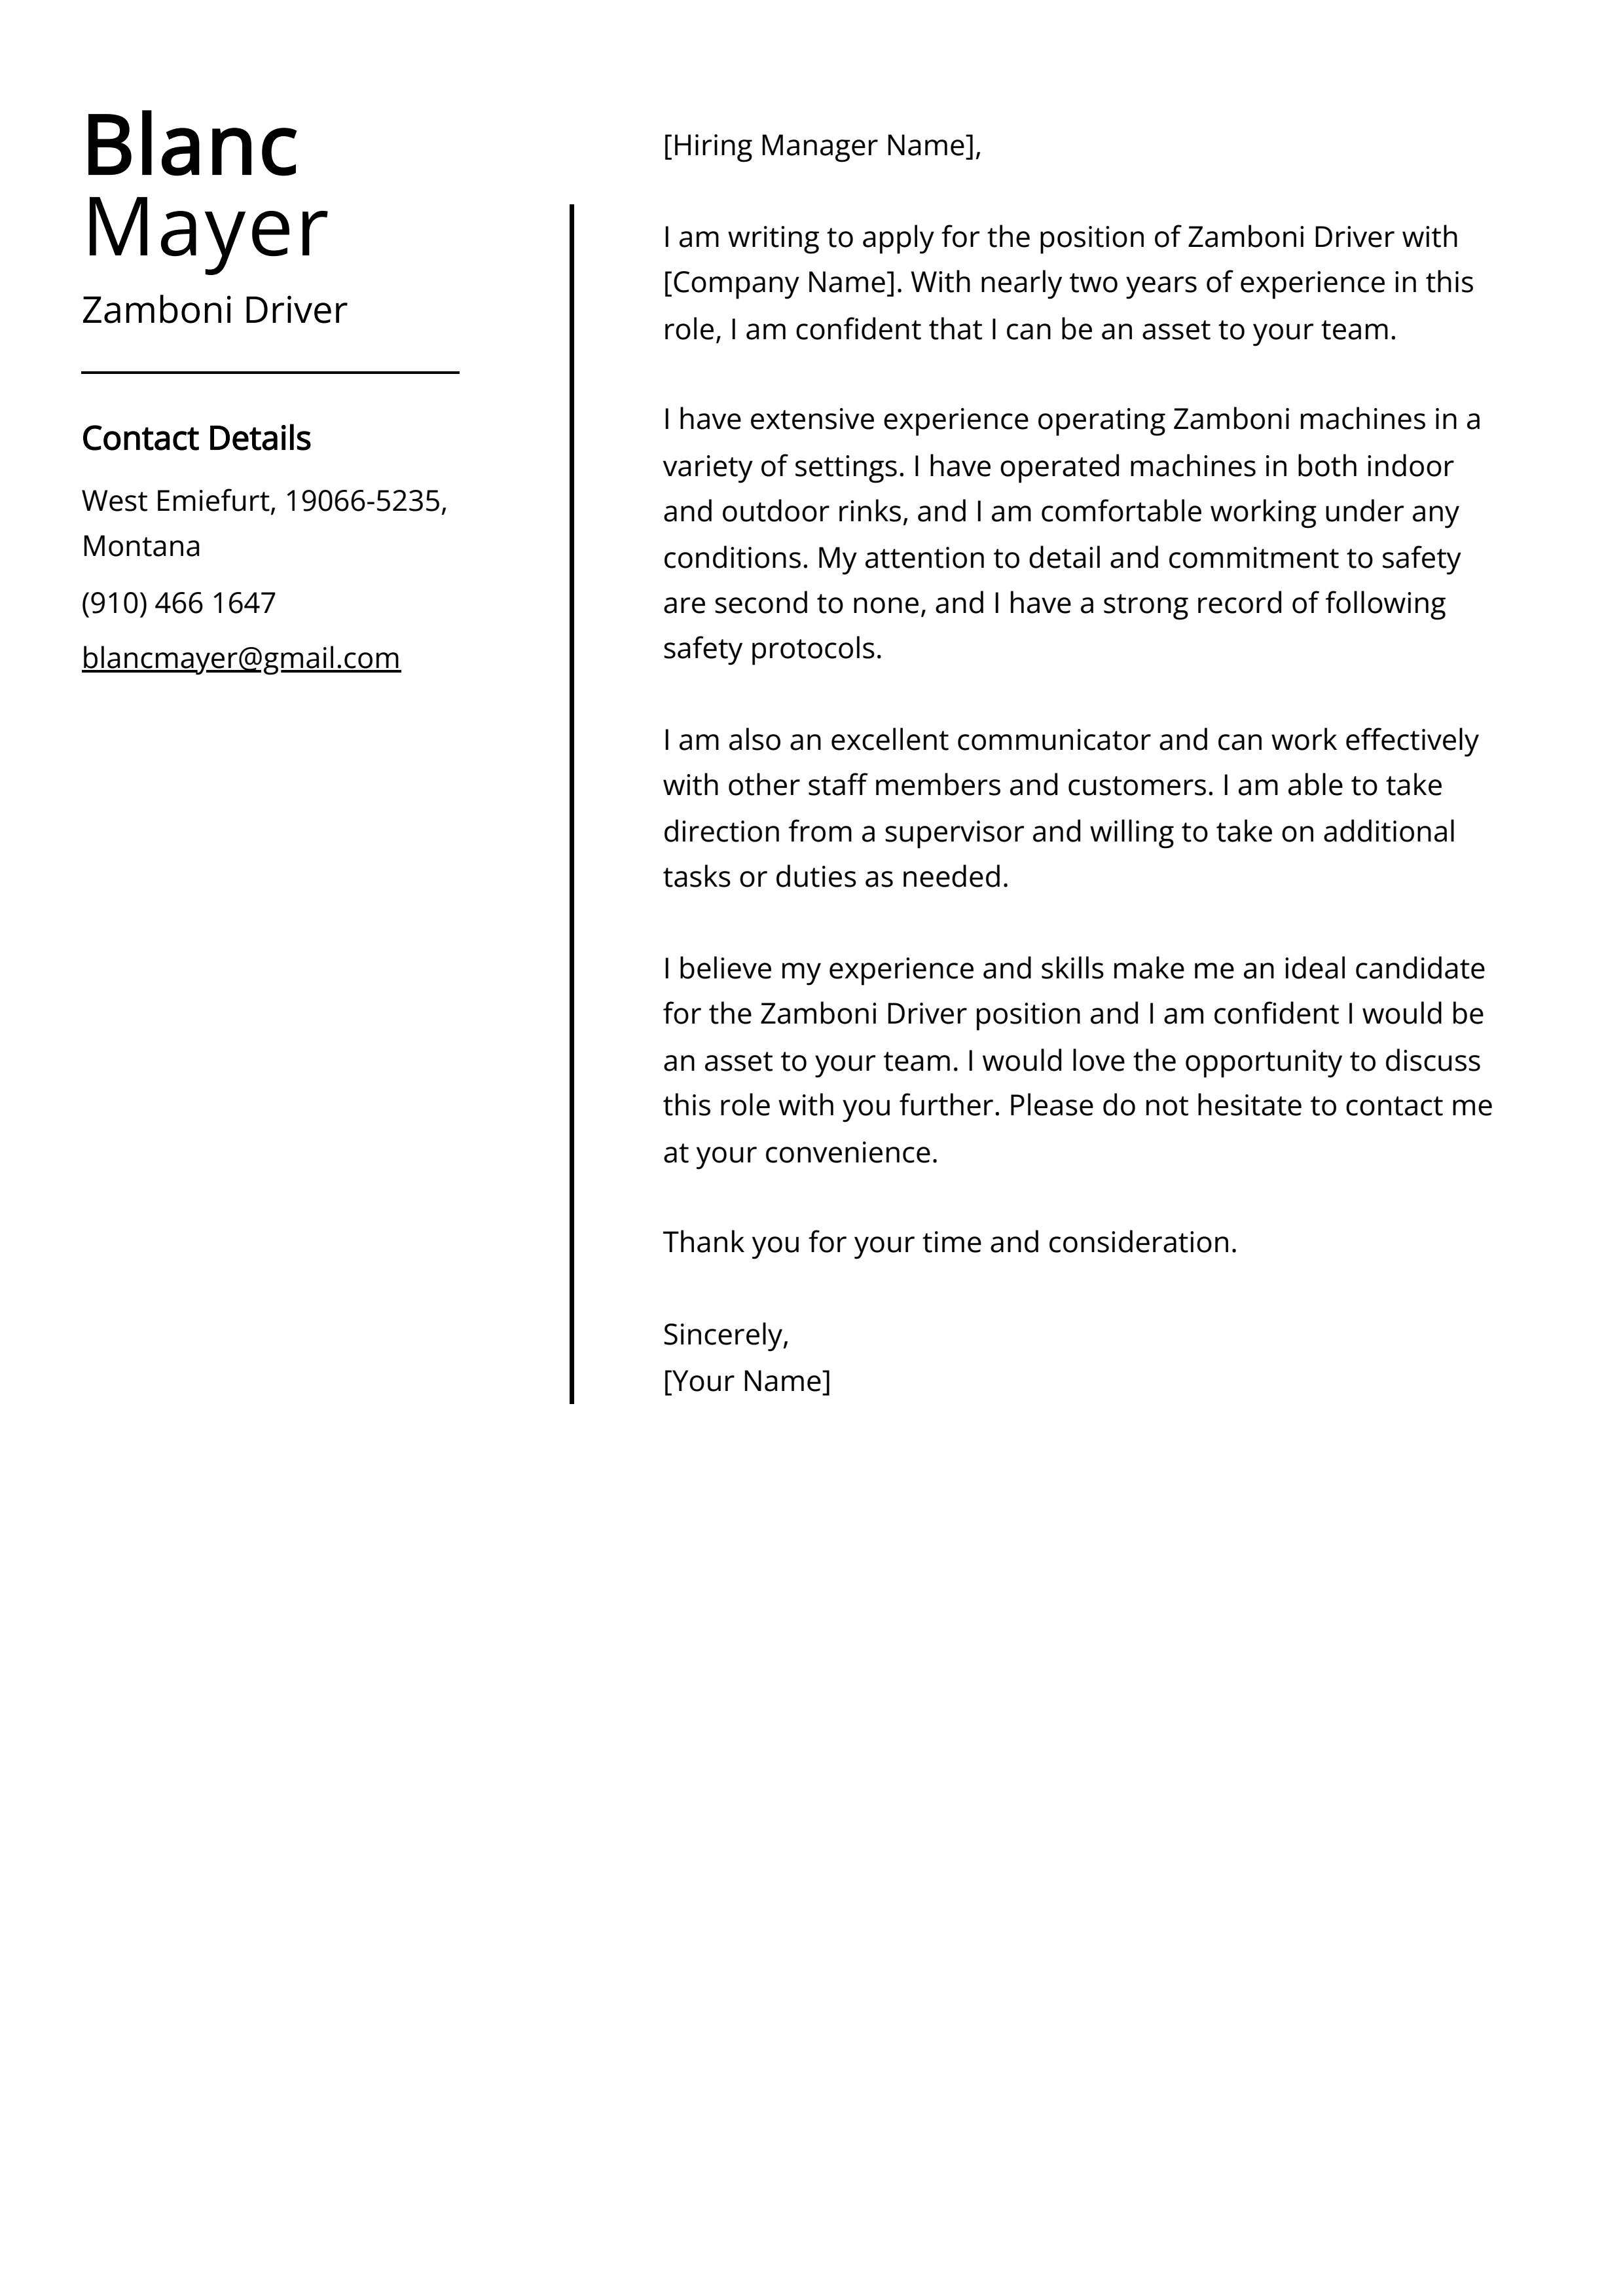 Zamboni Driver Cover Letter Example